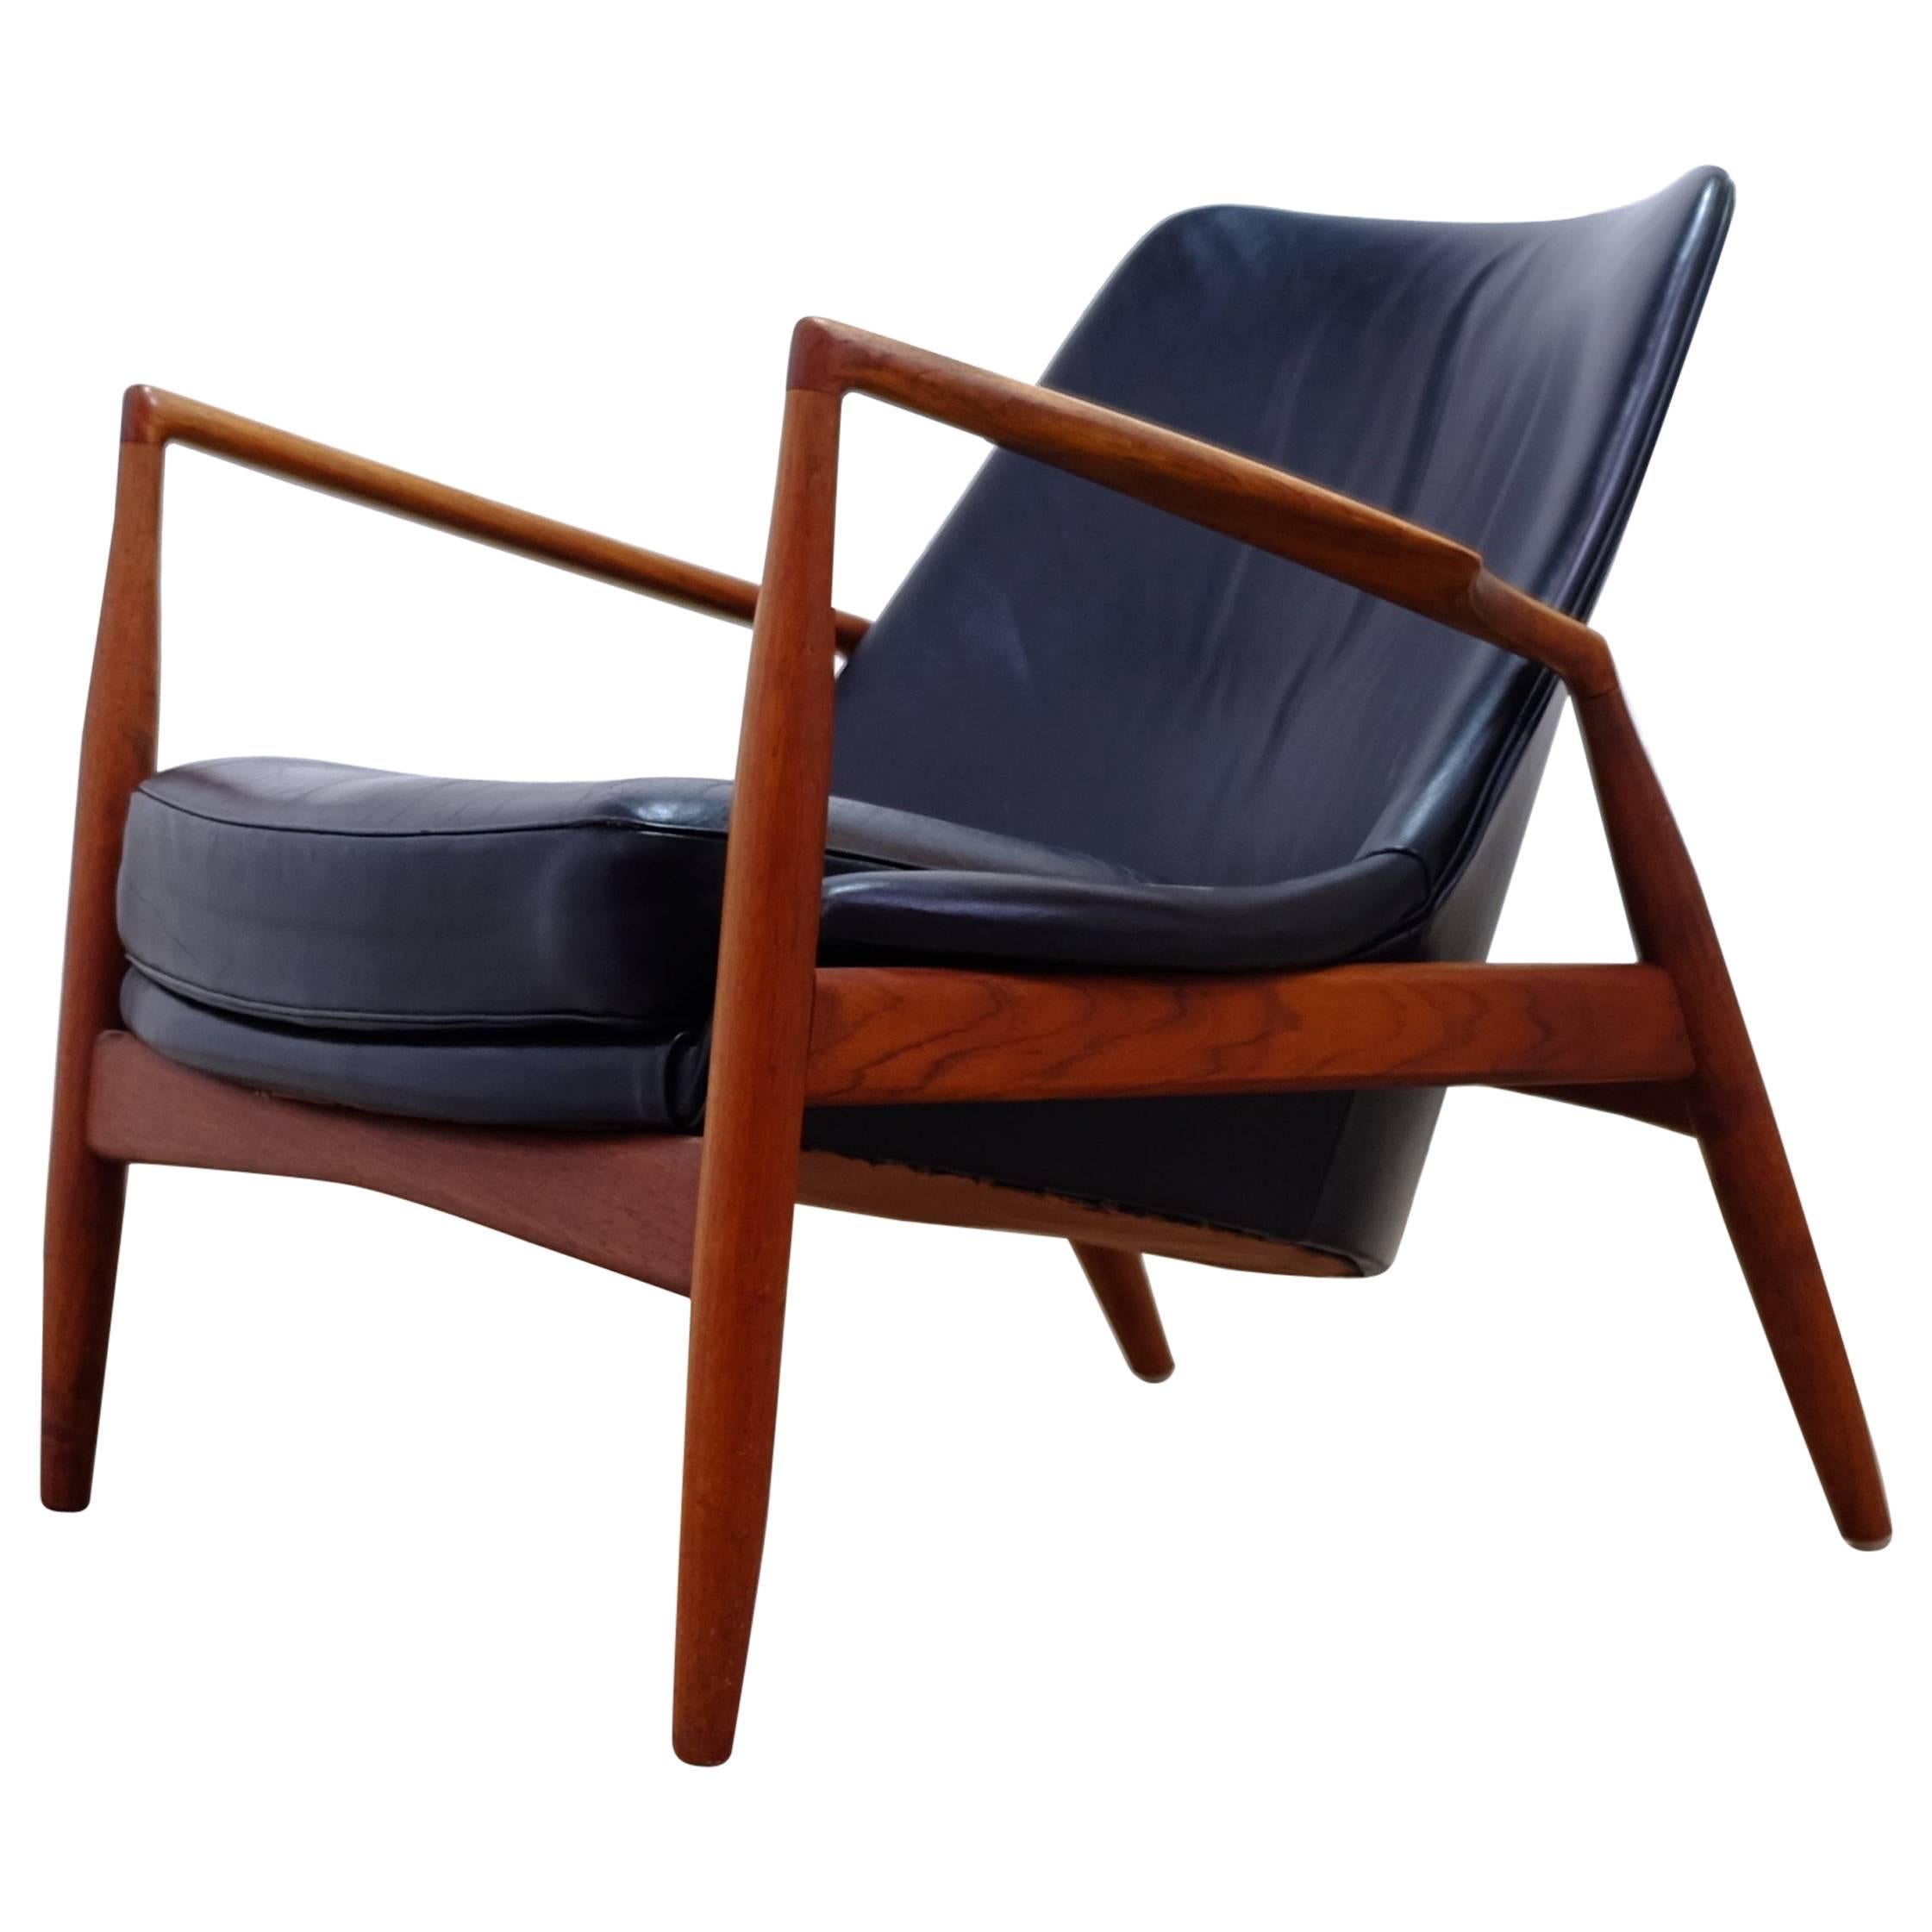 Ib Kofod-Larsen Seal Easy Chair